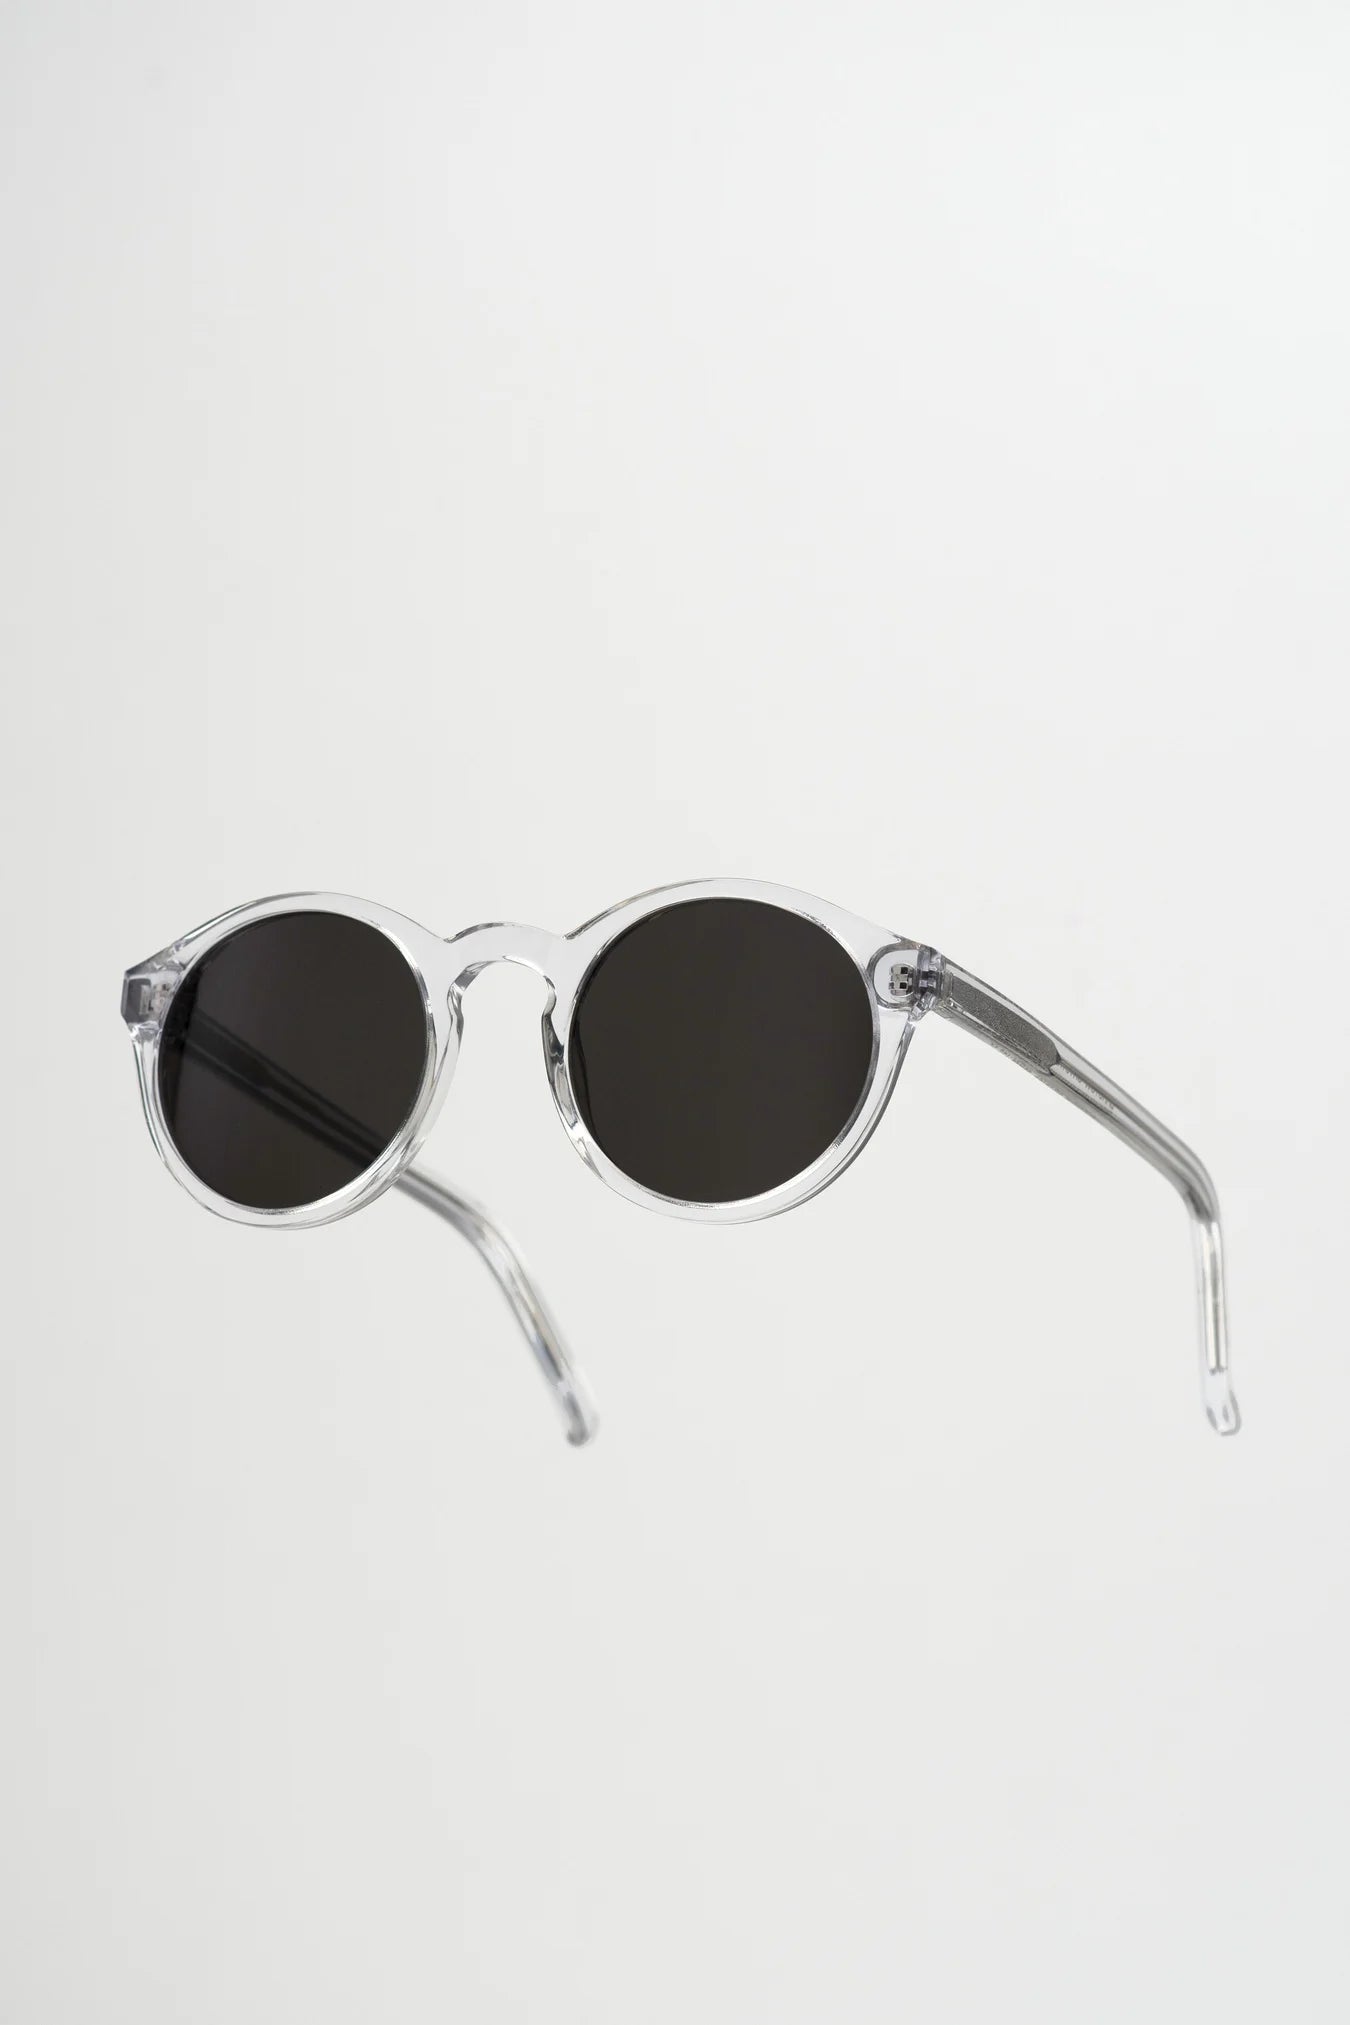 Monokel Eyewear Barstow Crystal Unisex Adult Sunglasses